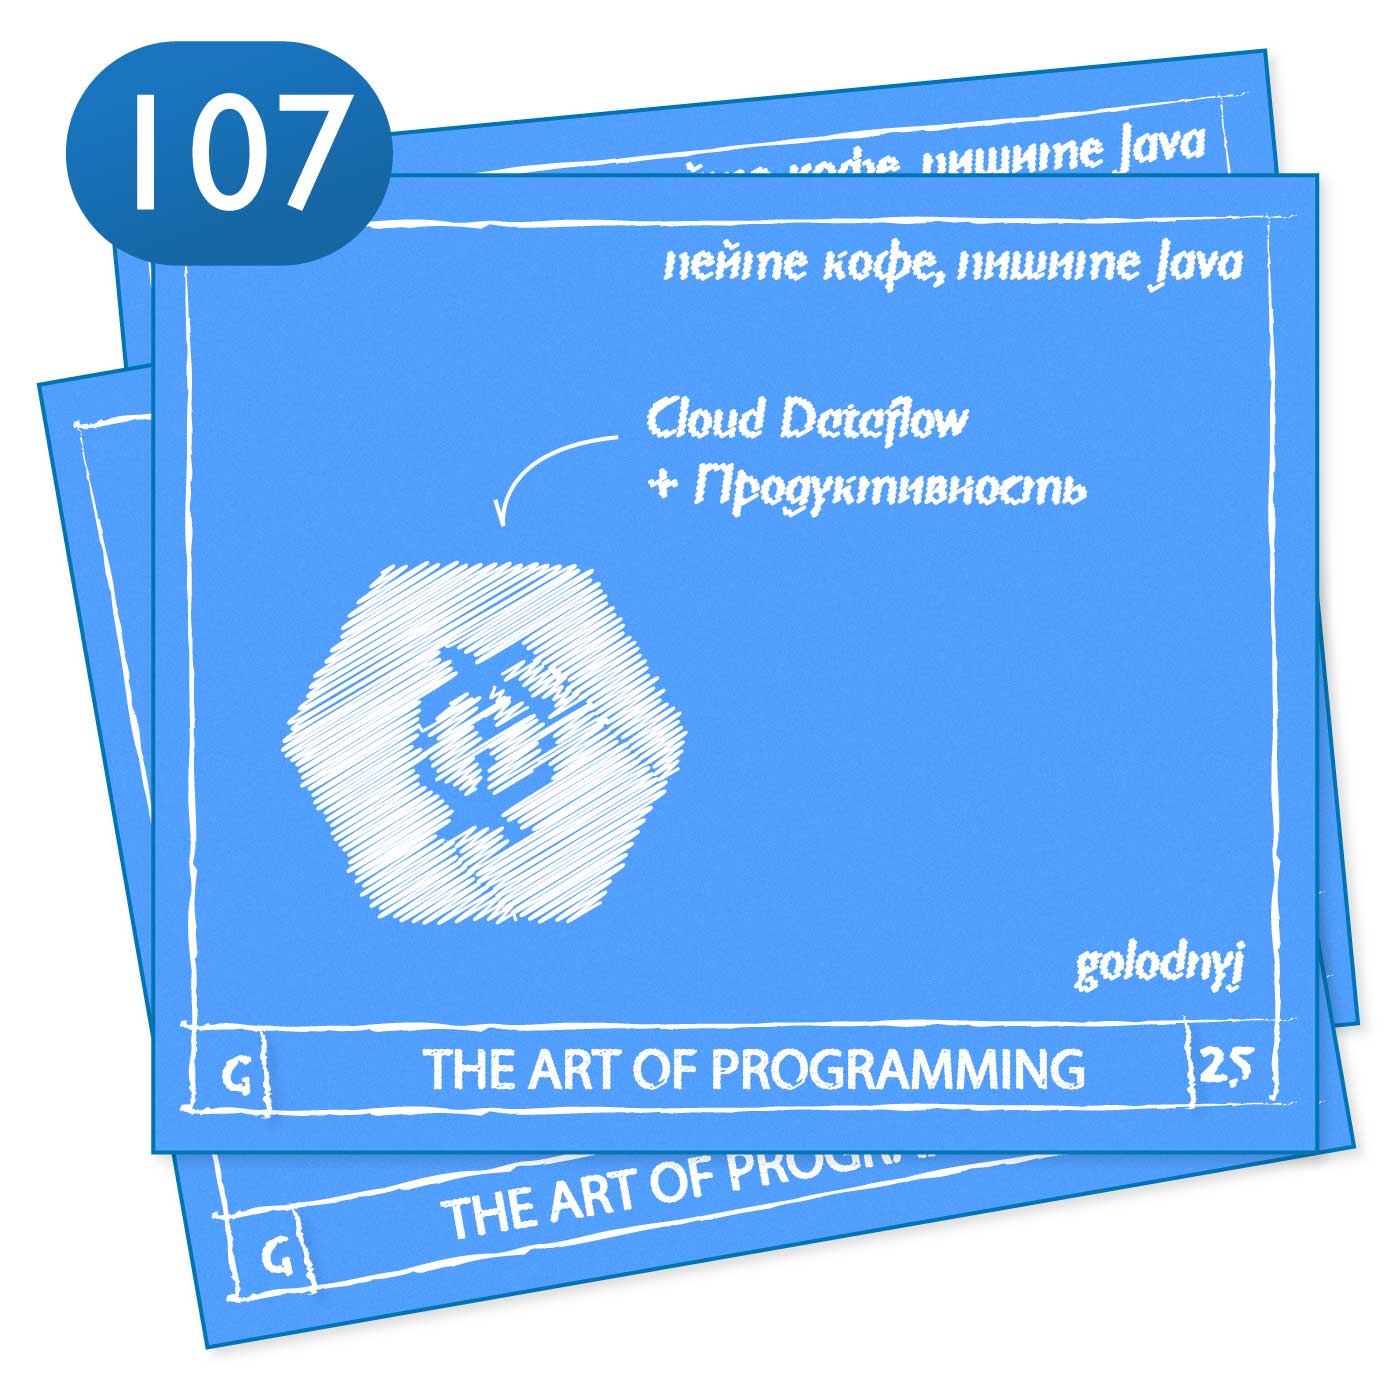 Art of programming. Programming Art. The Art of Programming подкаст лого.